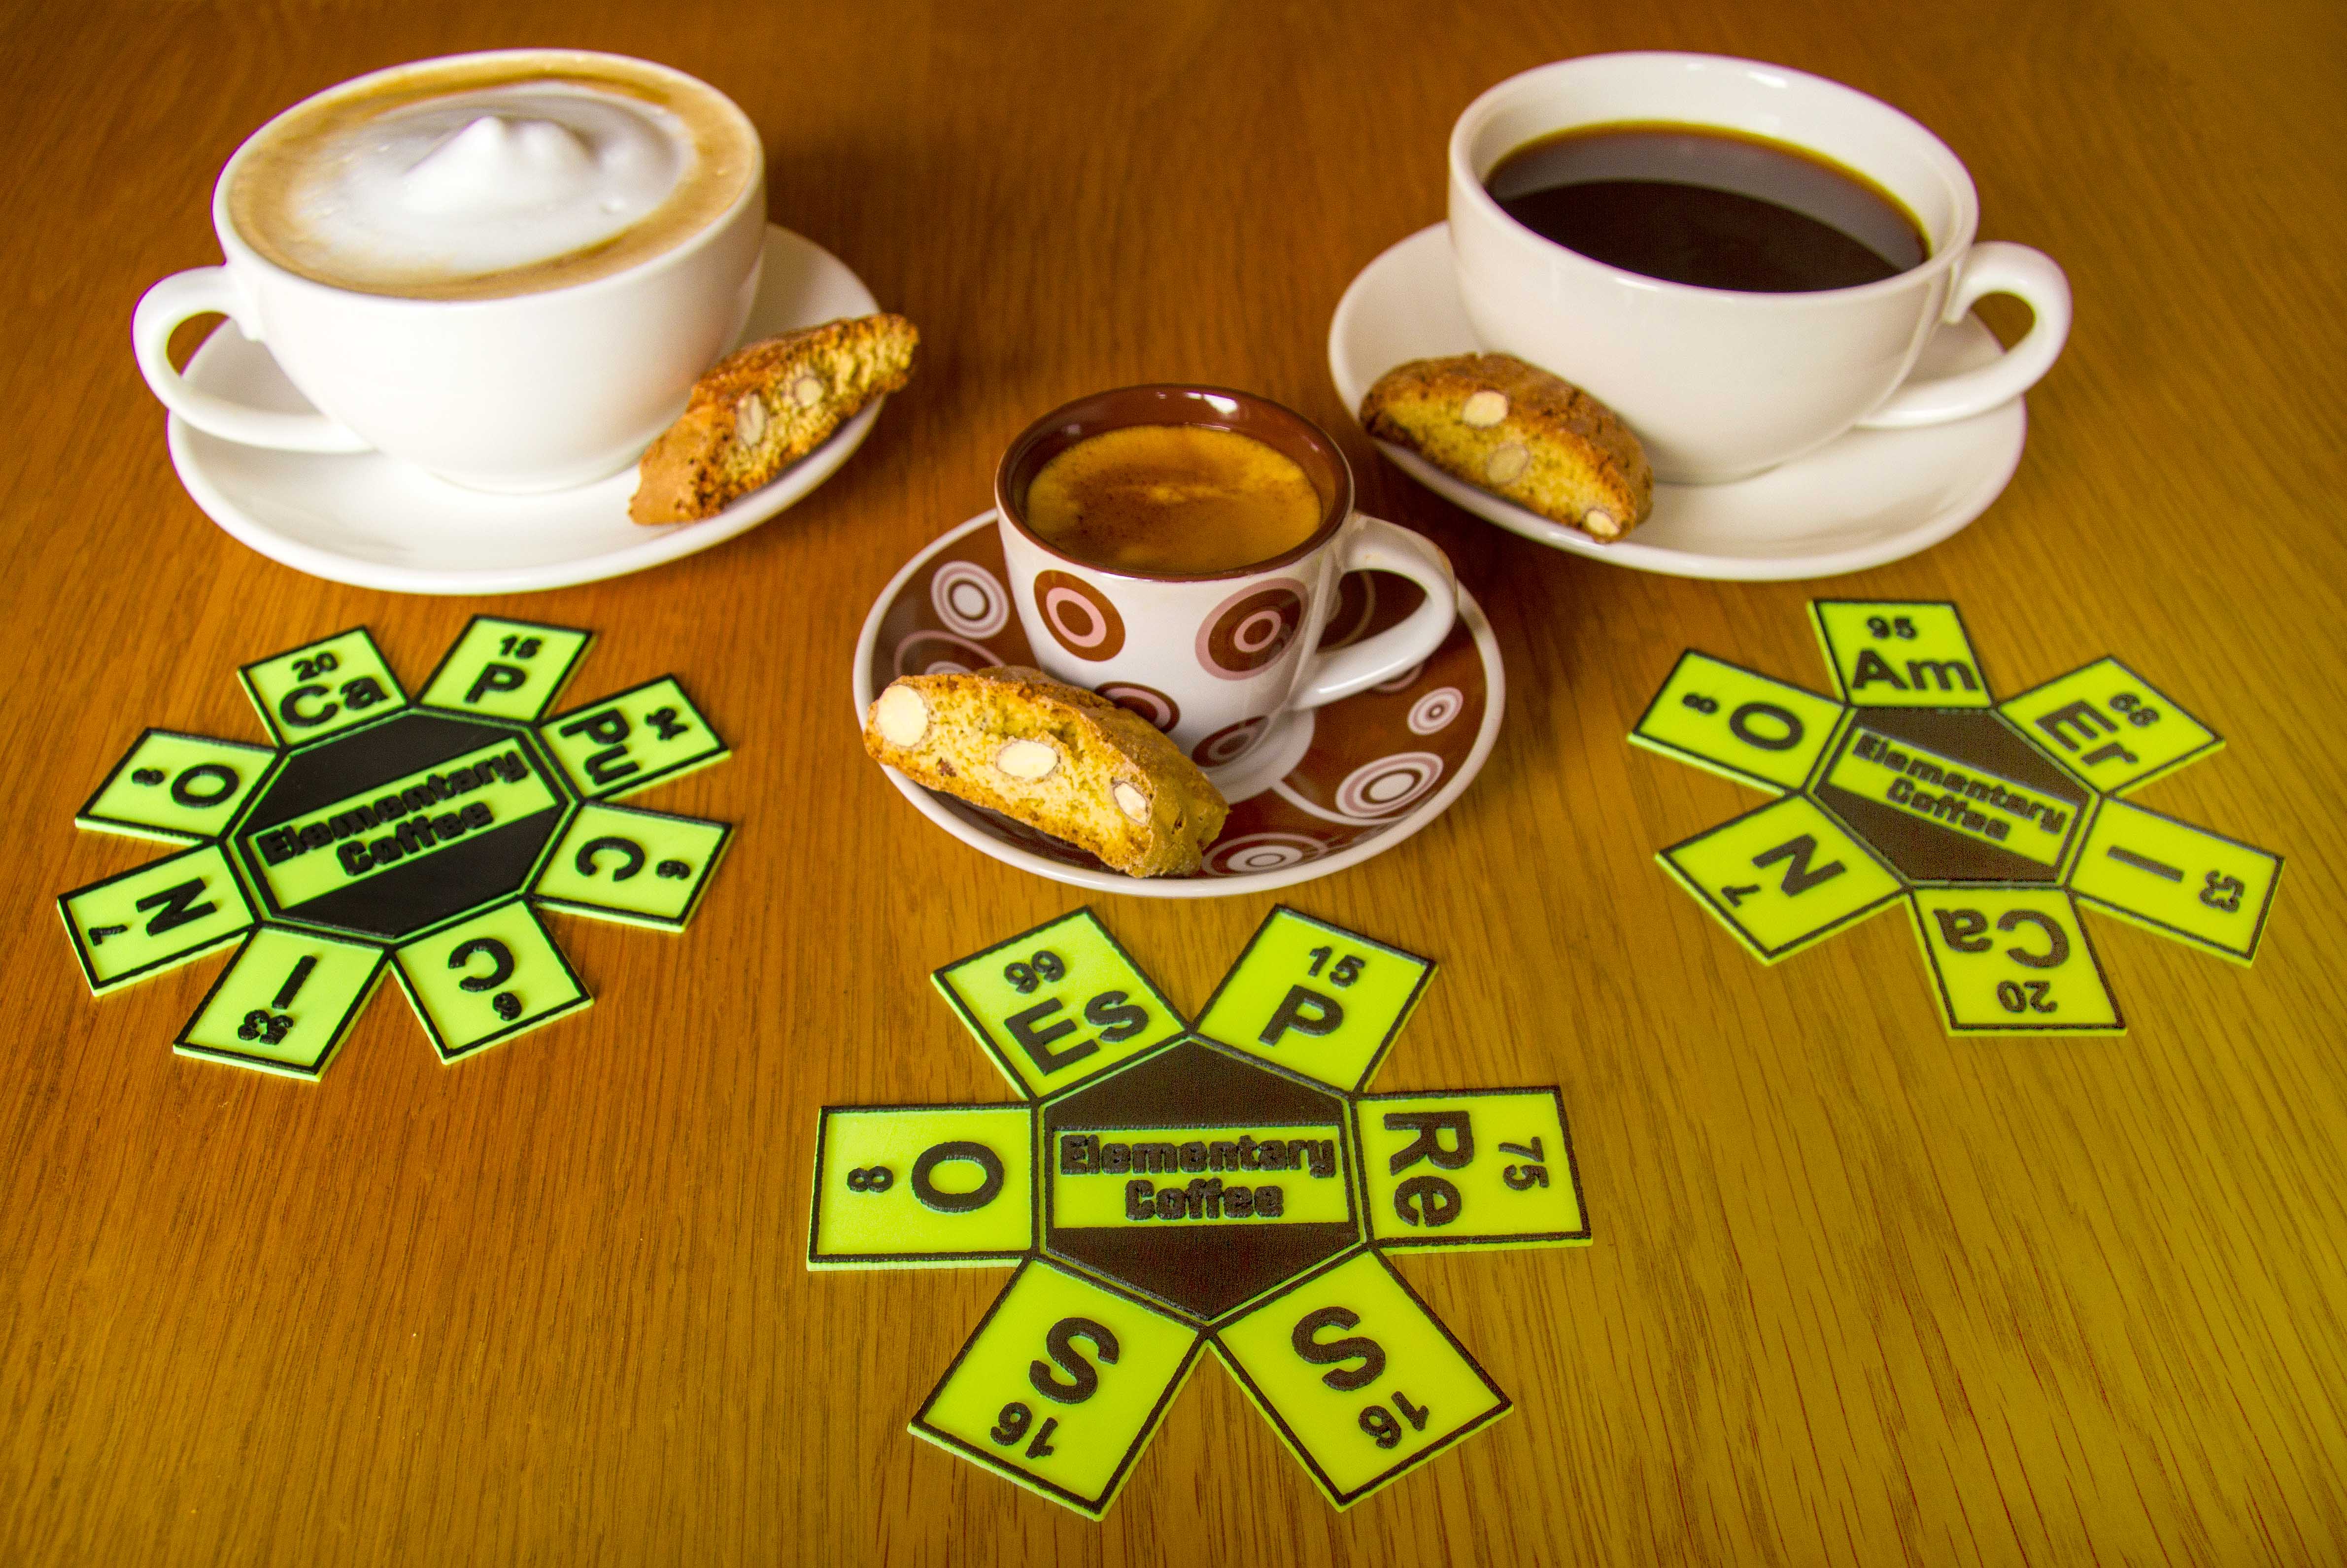 Elementary Coffee Coasters